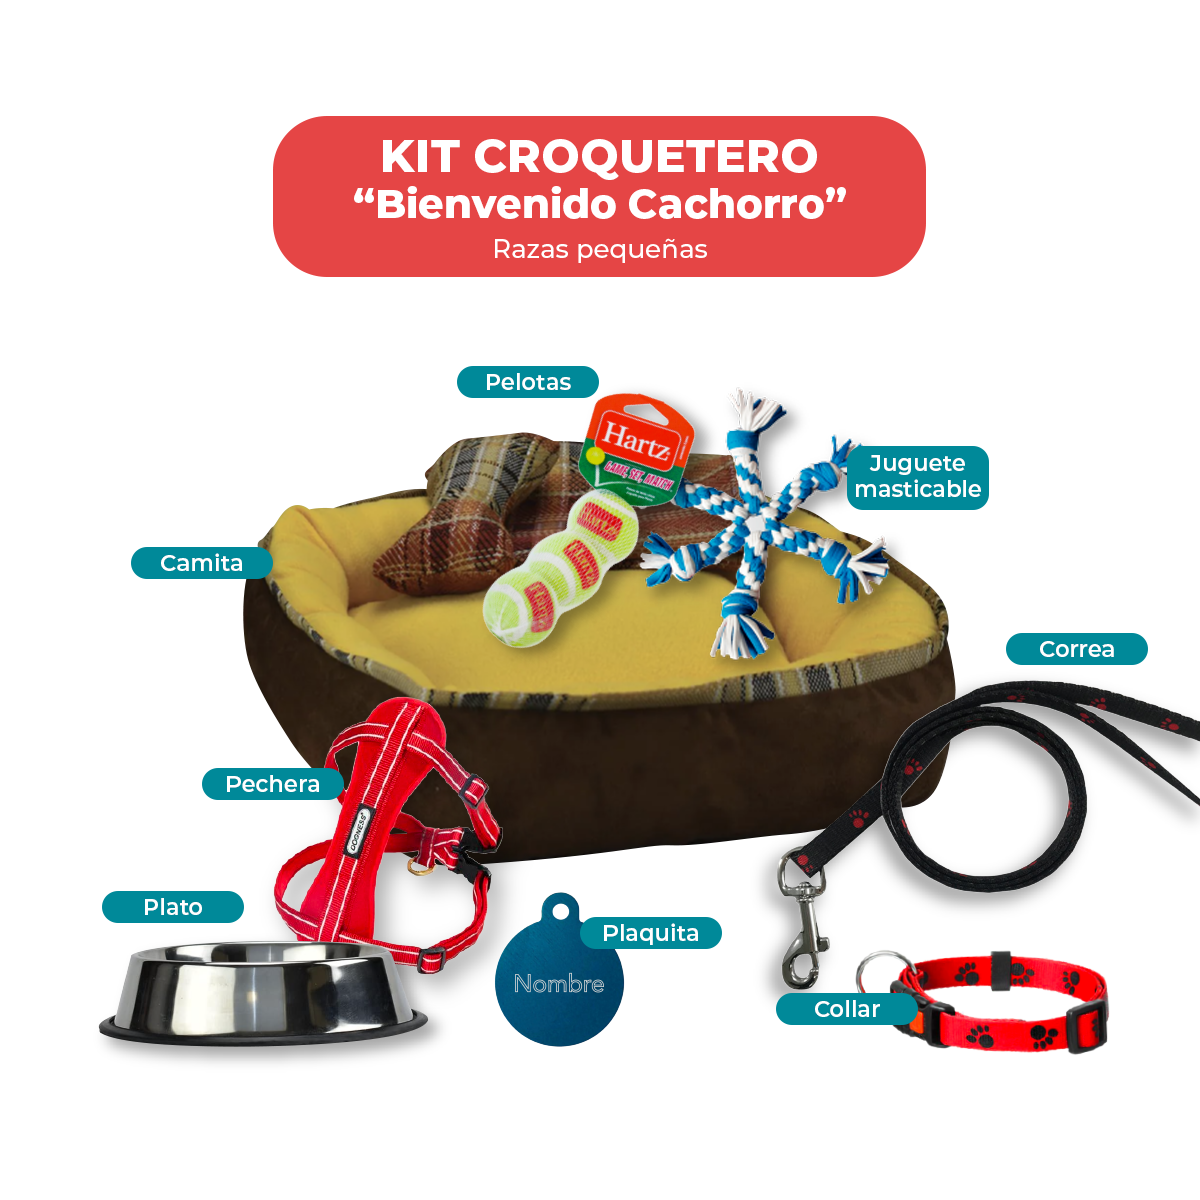 Kit para Nuevo Cachorro Croquetero